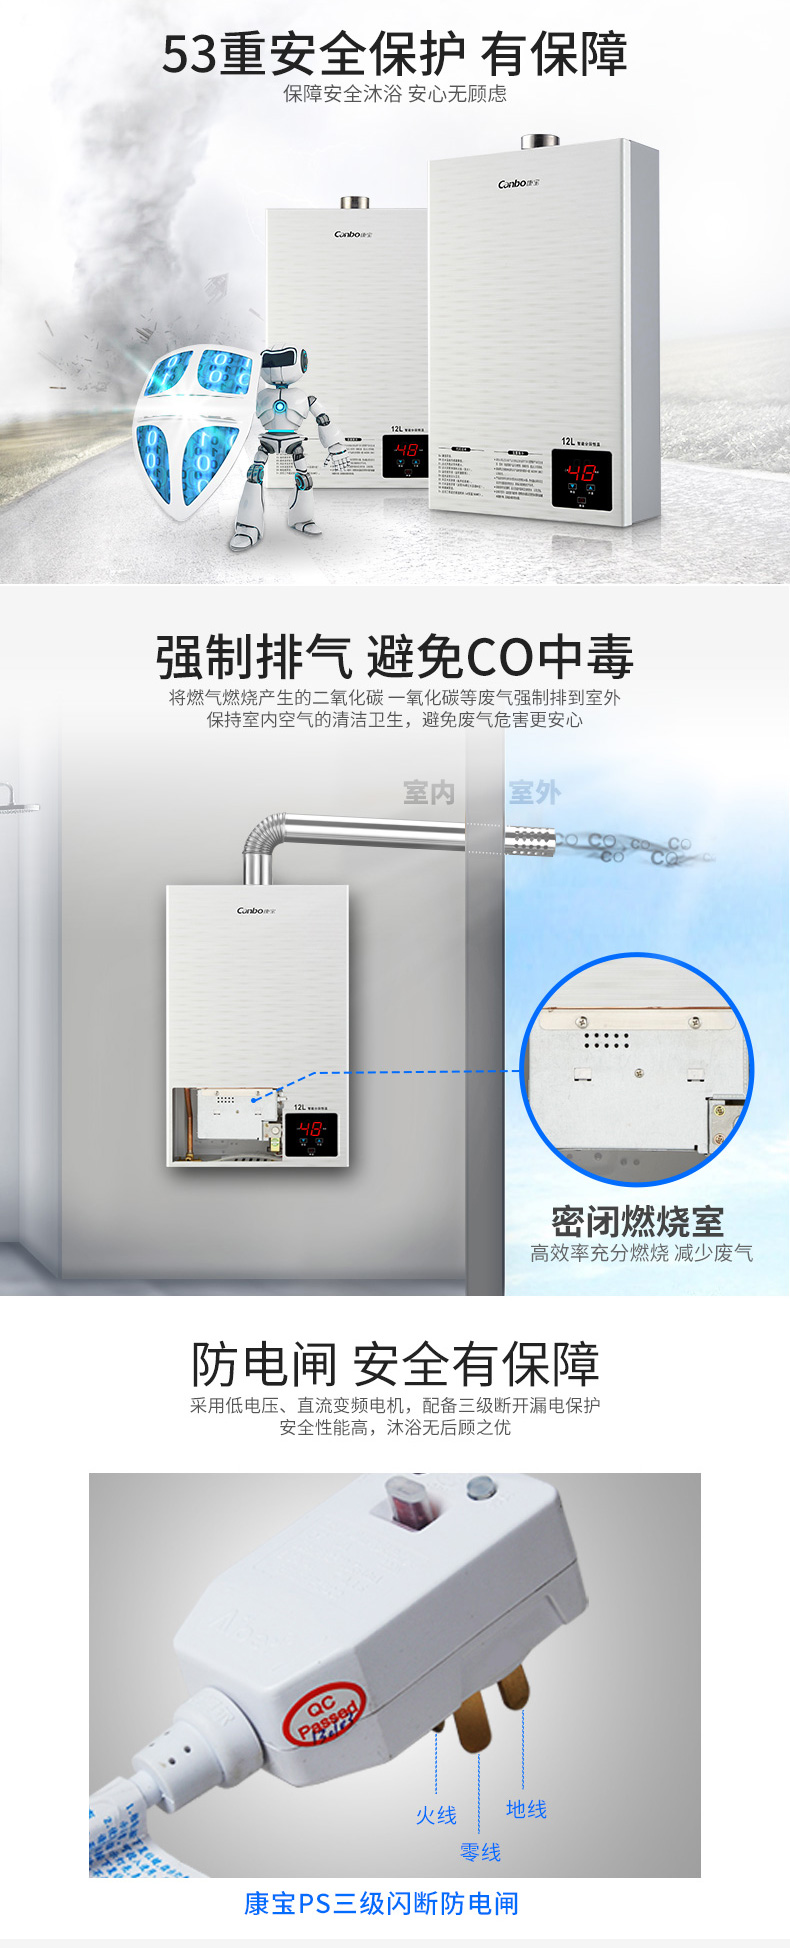 Canbo/康宝 JSQ23-1008FX燃气热水器 液化气 12L强排式恒温安全洗澡多省包邮